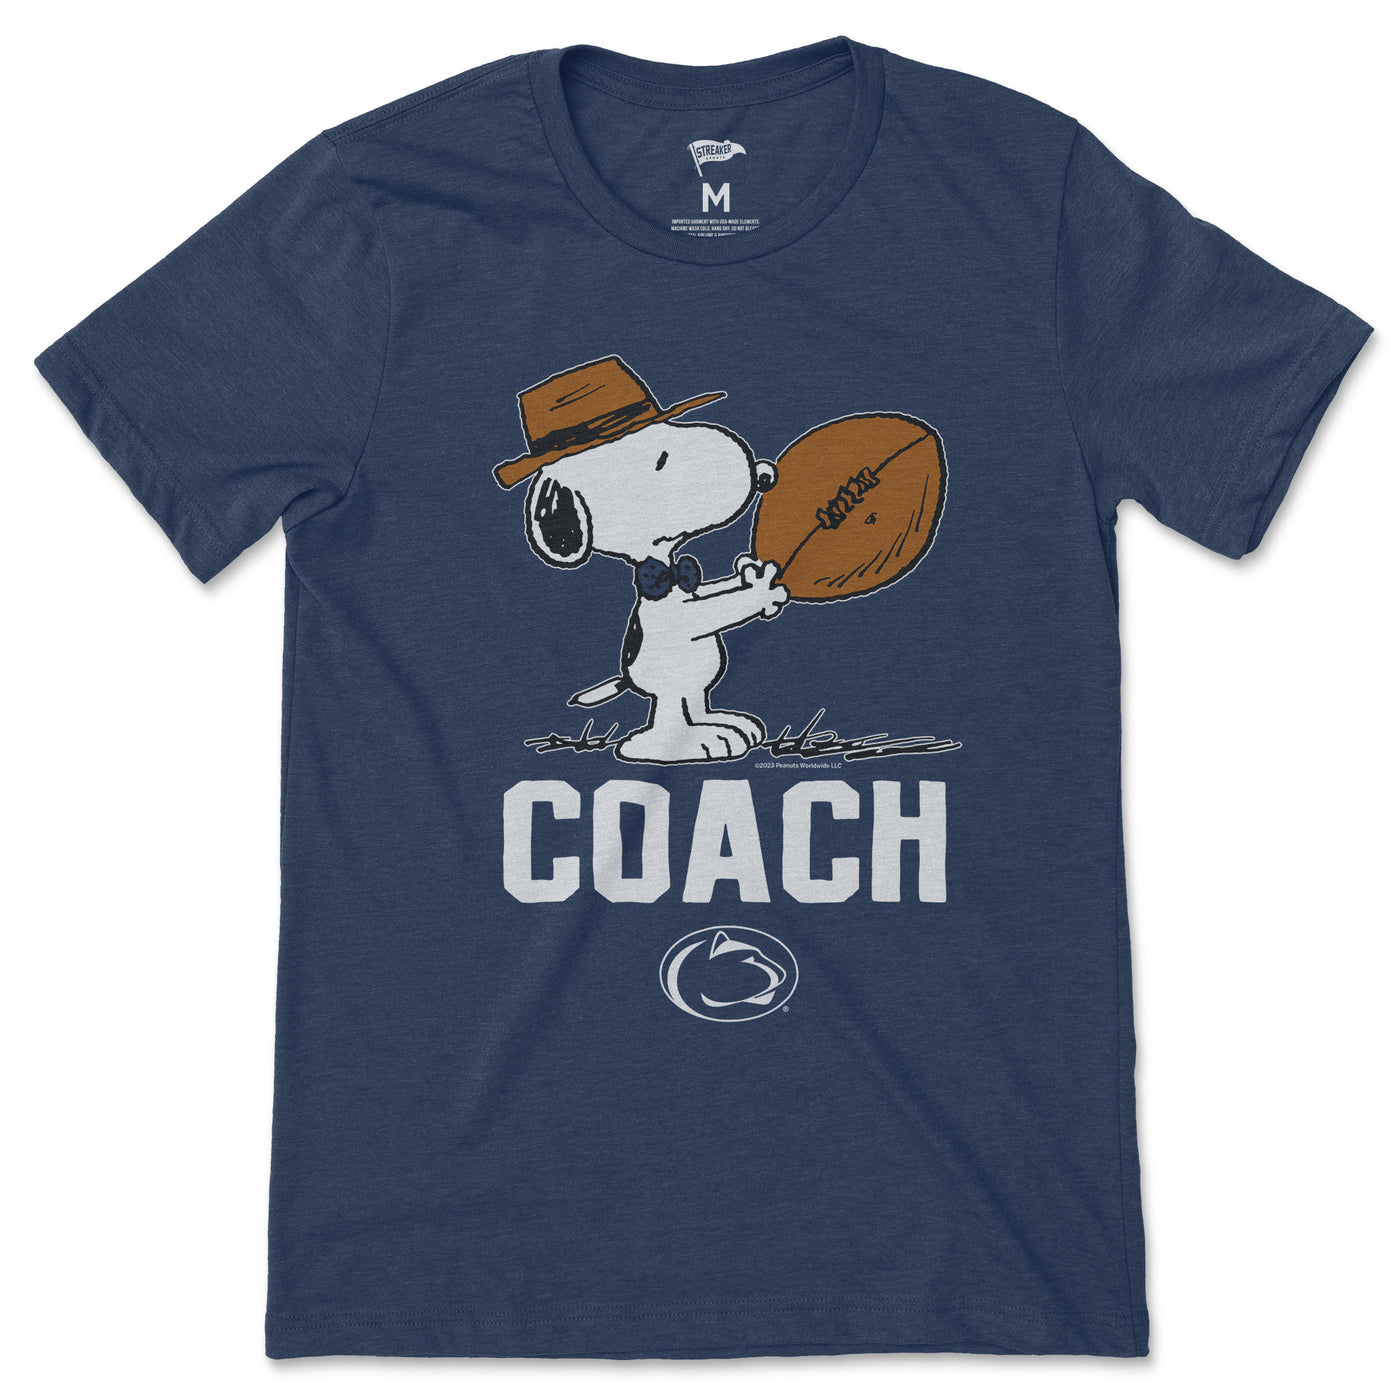 Peanuts x Penn State Football Coach Tee - Streaker Sports